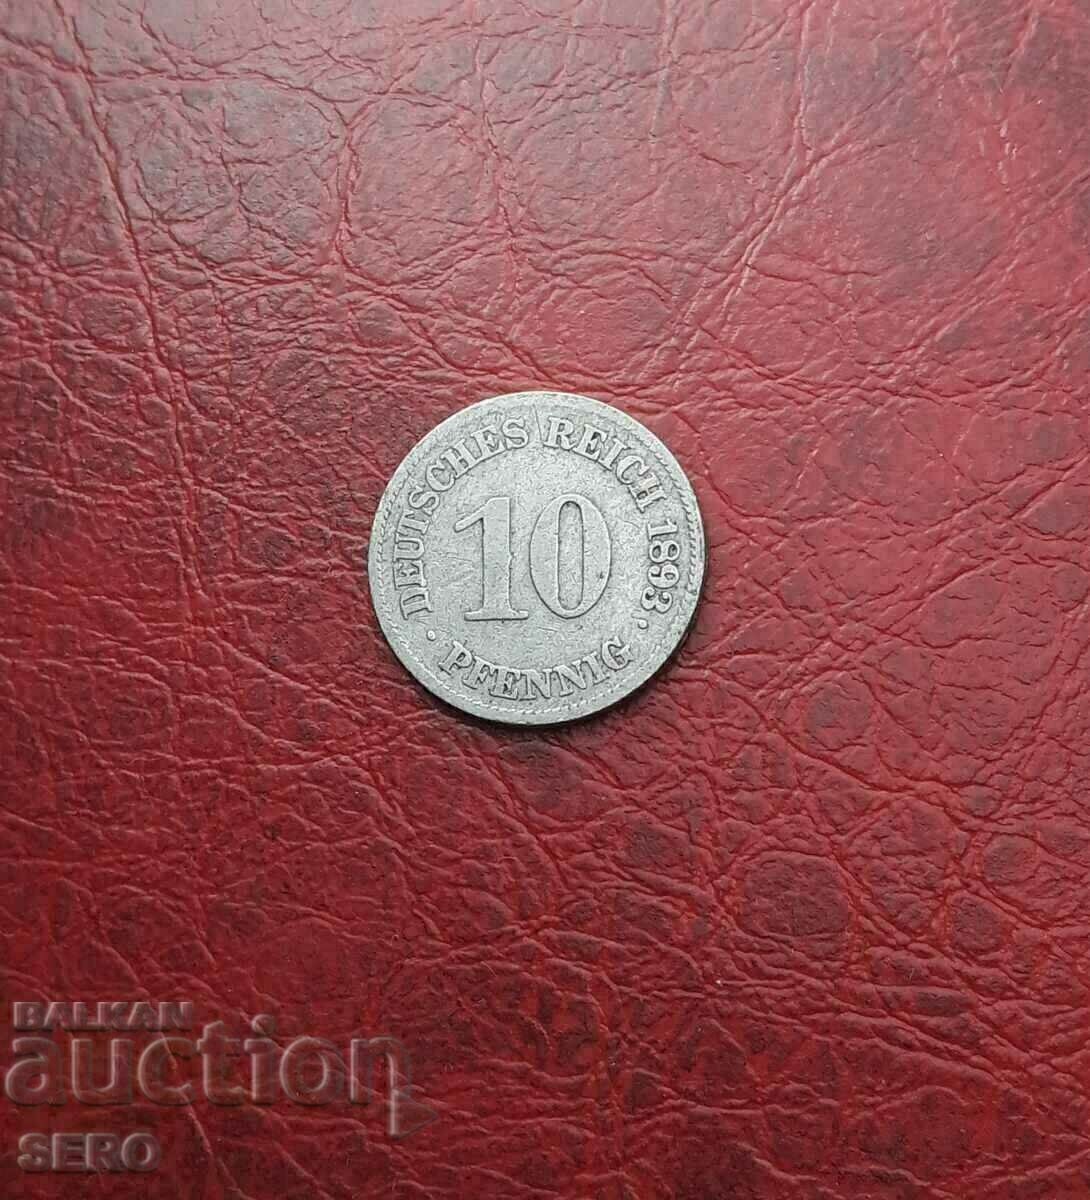 Germania-10 pfennig 1893 E-Muldenhüten-foarte rar